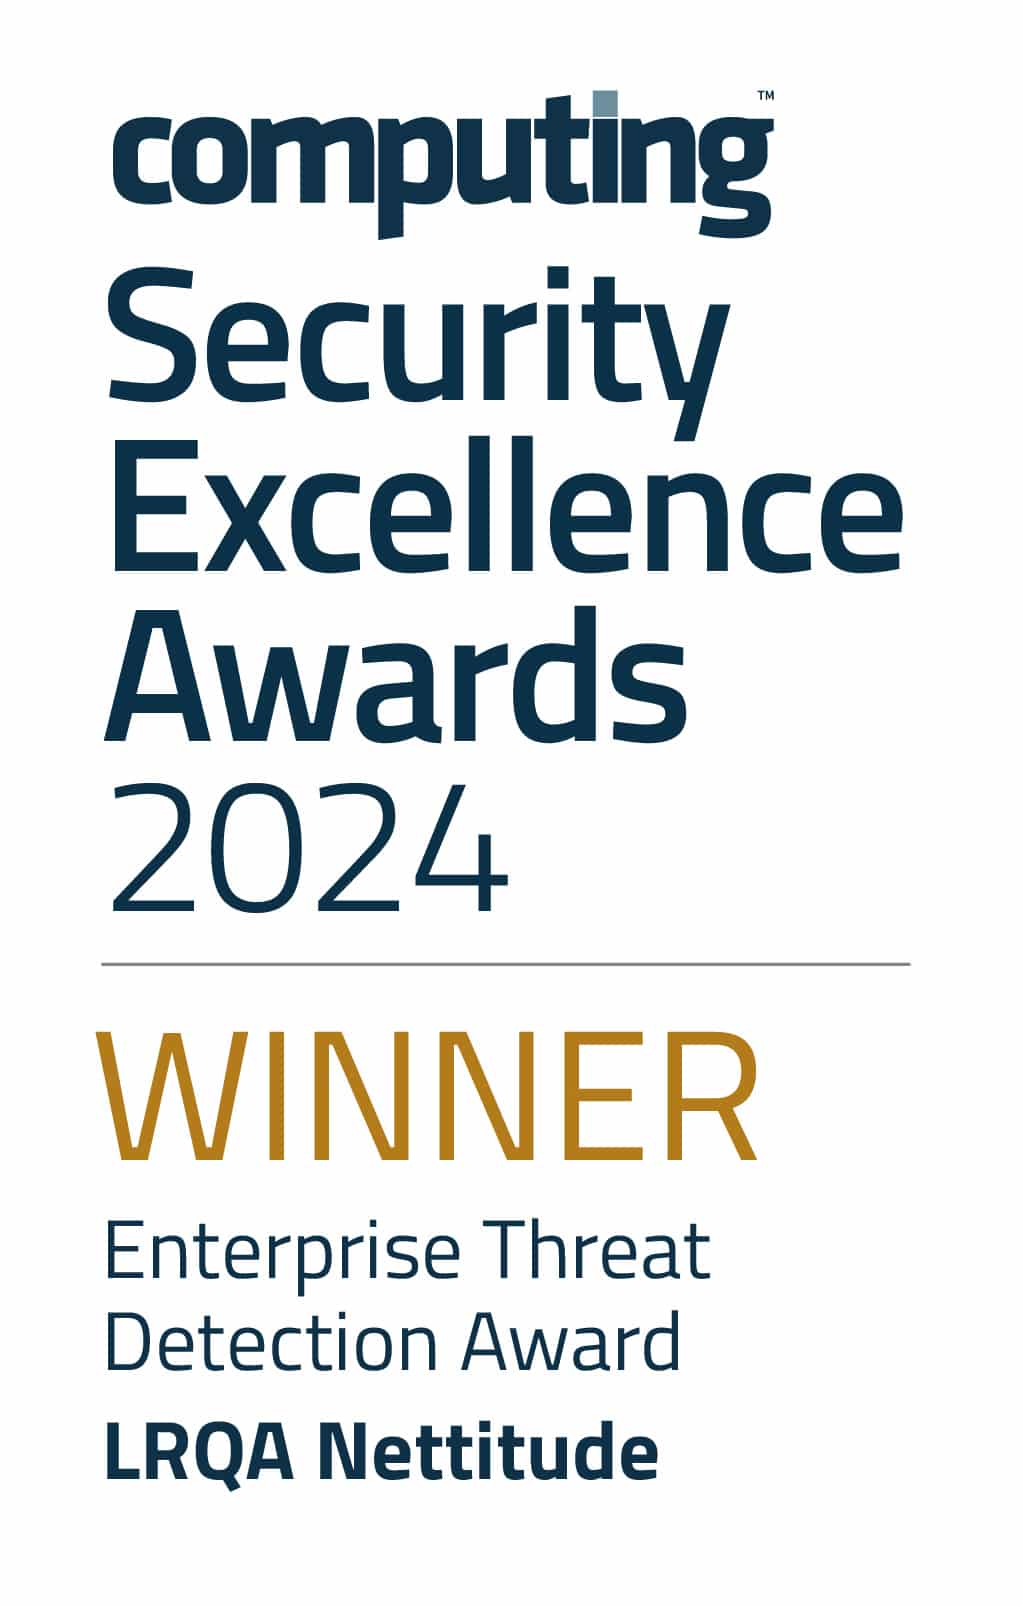 Computing Security Excellence Awards 2024 - WINNER - Enterprise Threat Detection Award